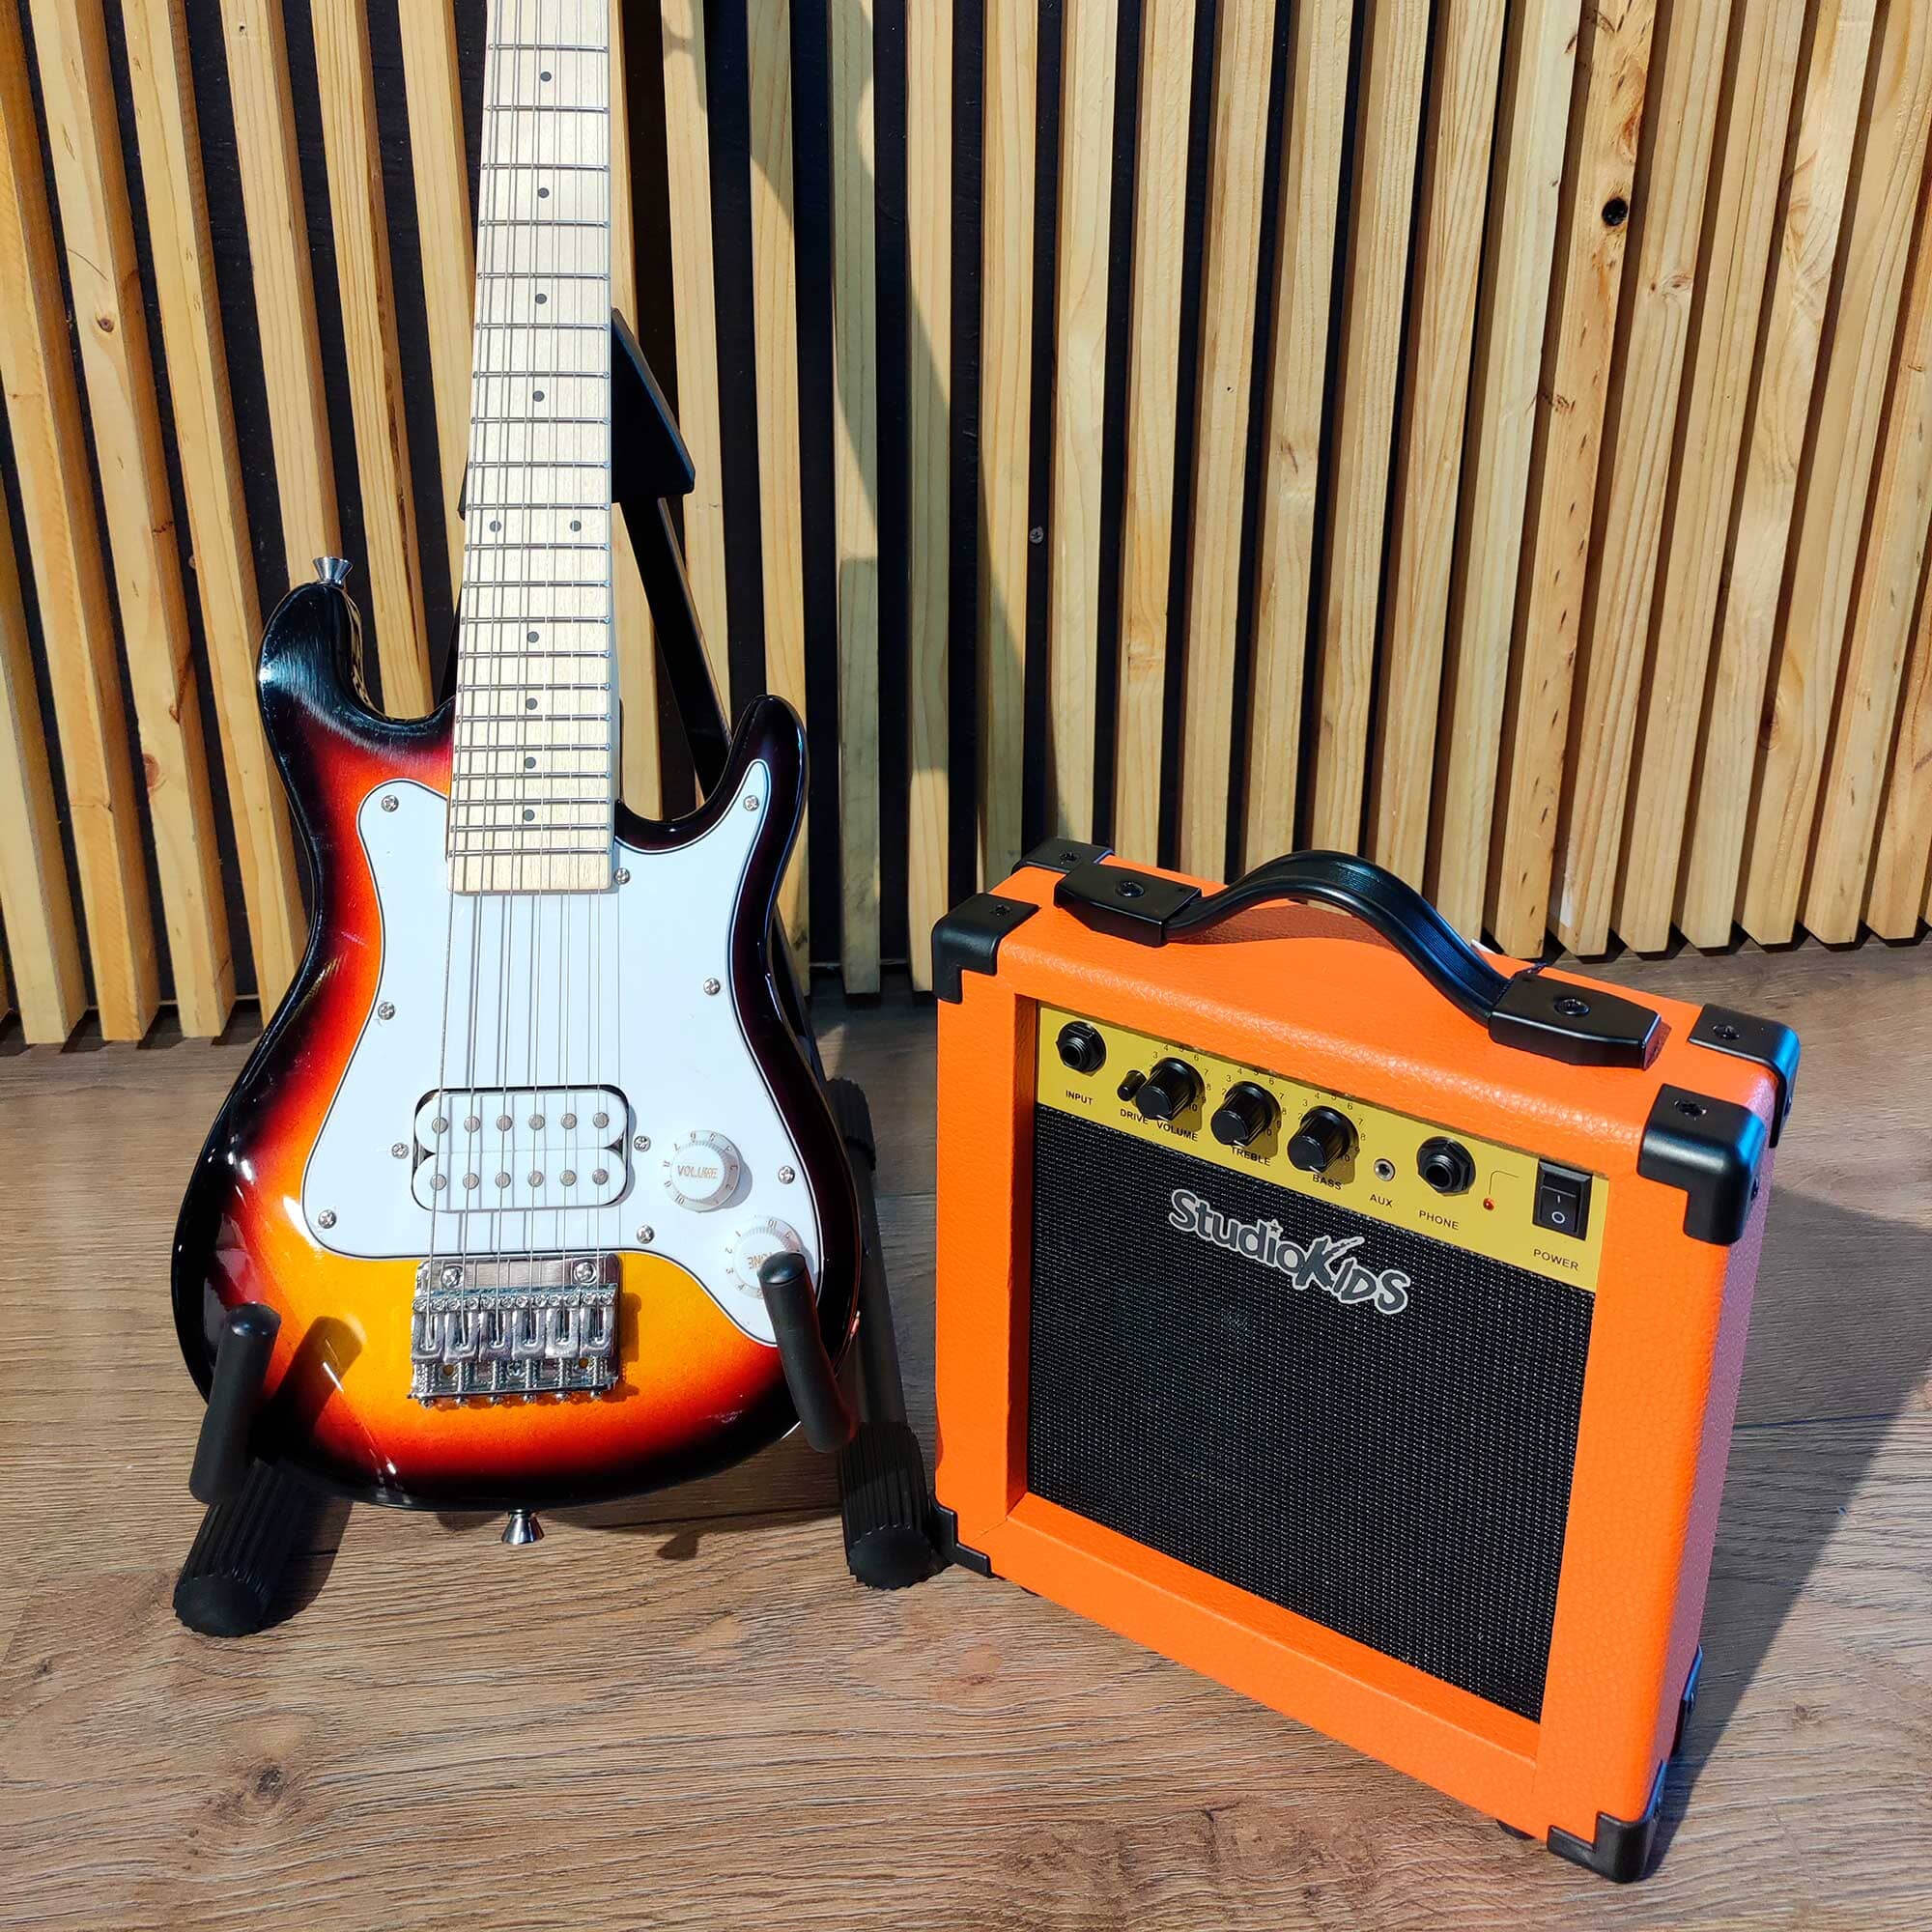 StudioKIDS GA15 Orange Amplificador de Guitarra Eléctrica 15 Watts Amplificadores de Guitarra StudioKIDS 